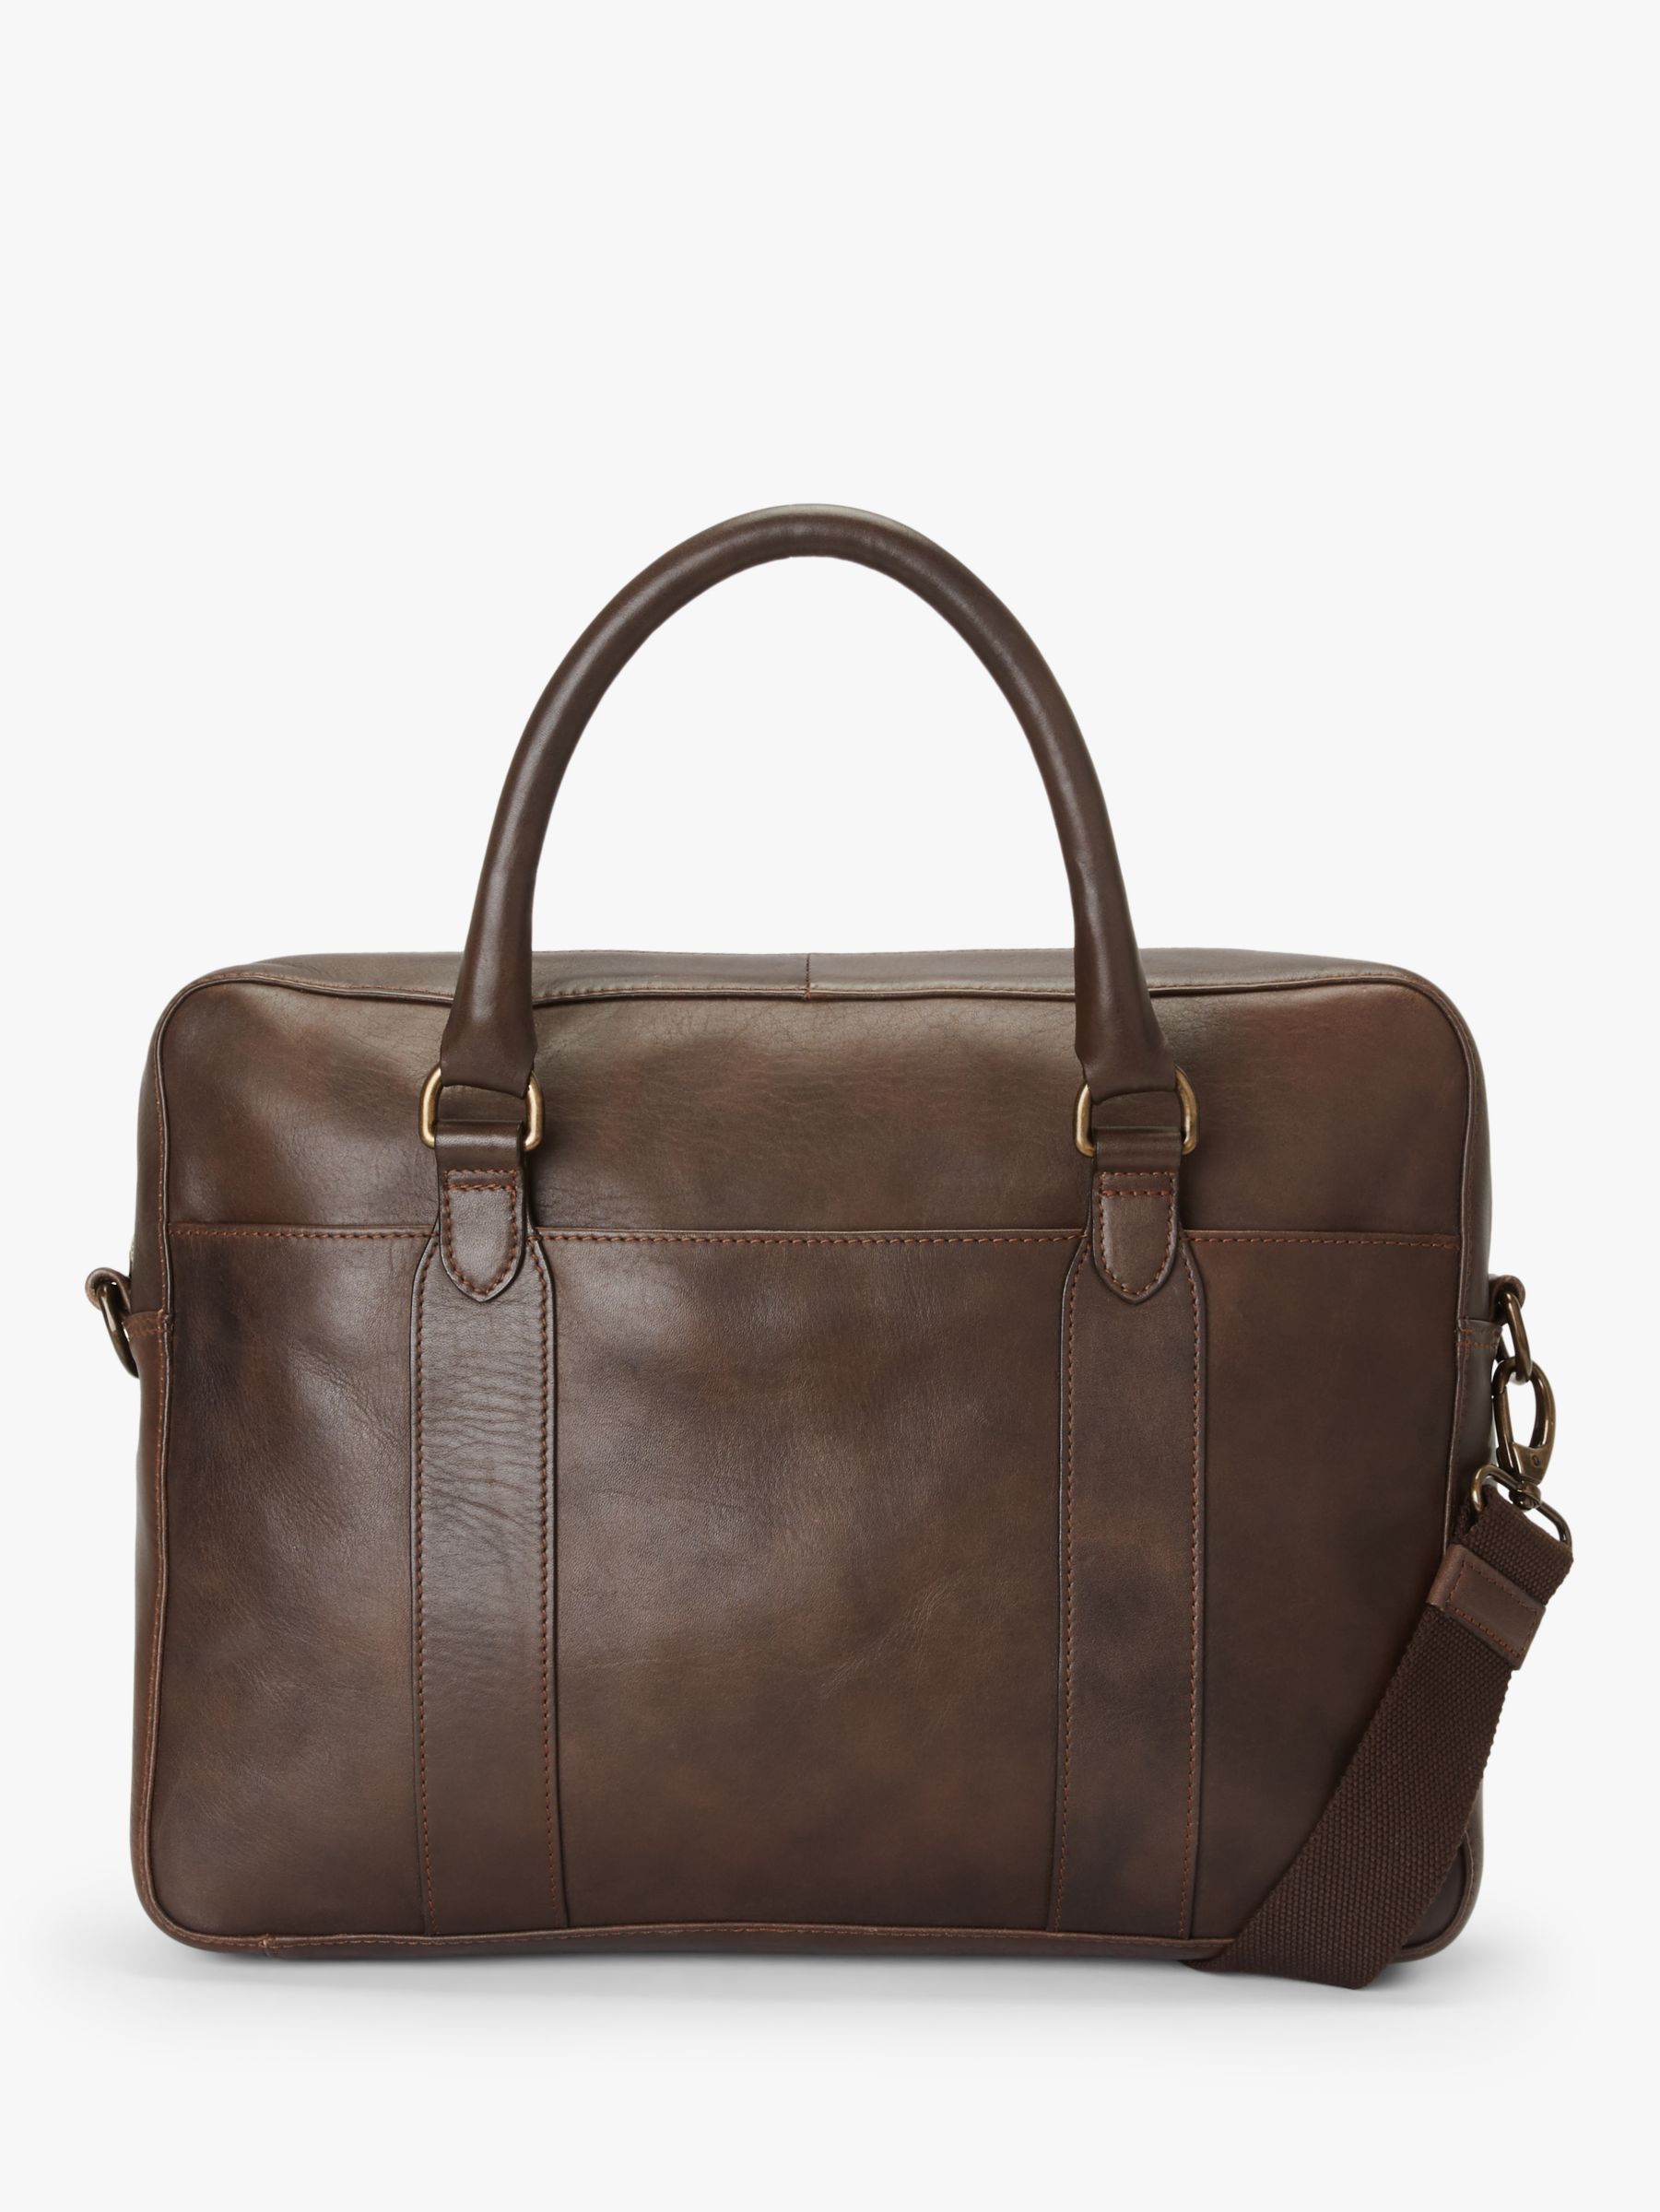 Men's Bags | Briefcase, Messenger, Shoulder, Holdall, Leather Bags ...